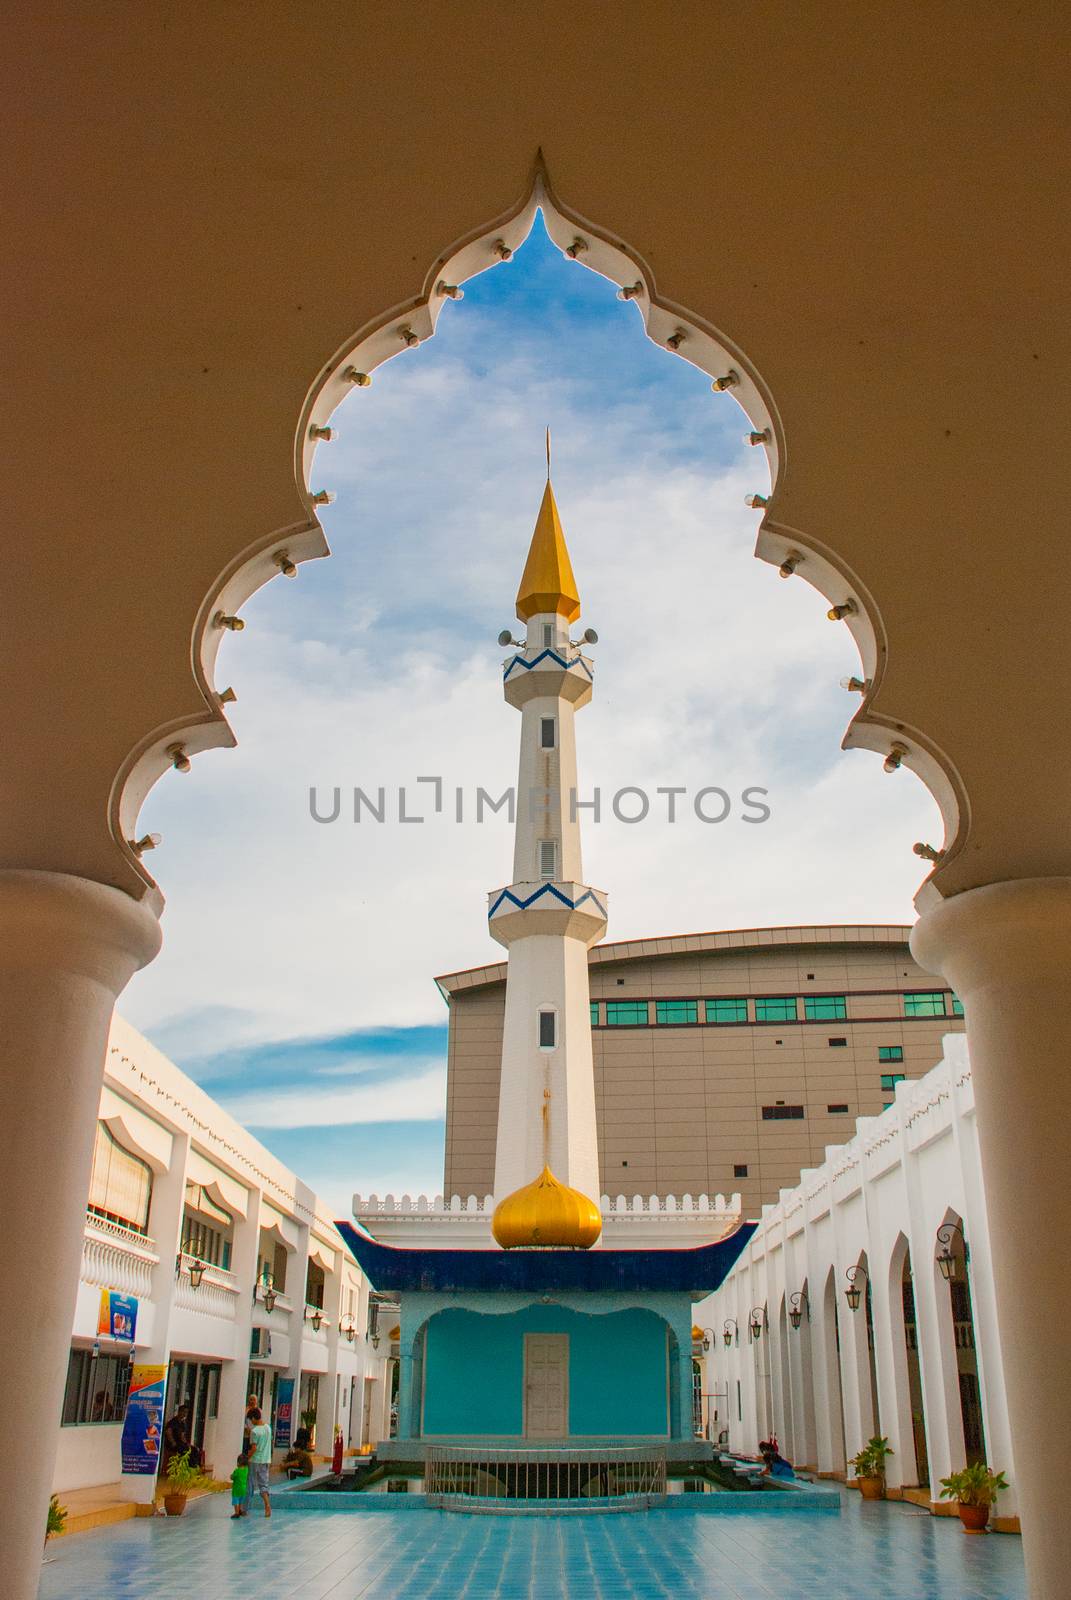 MIRI, SARAWAK, BORNEO, MALAYSIA - MARCH 2017: Beautiful Masjid At-Taqwa mosque with its Golden dome and palm trees. Miri city, Borneo, Sarawak